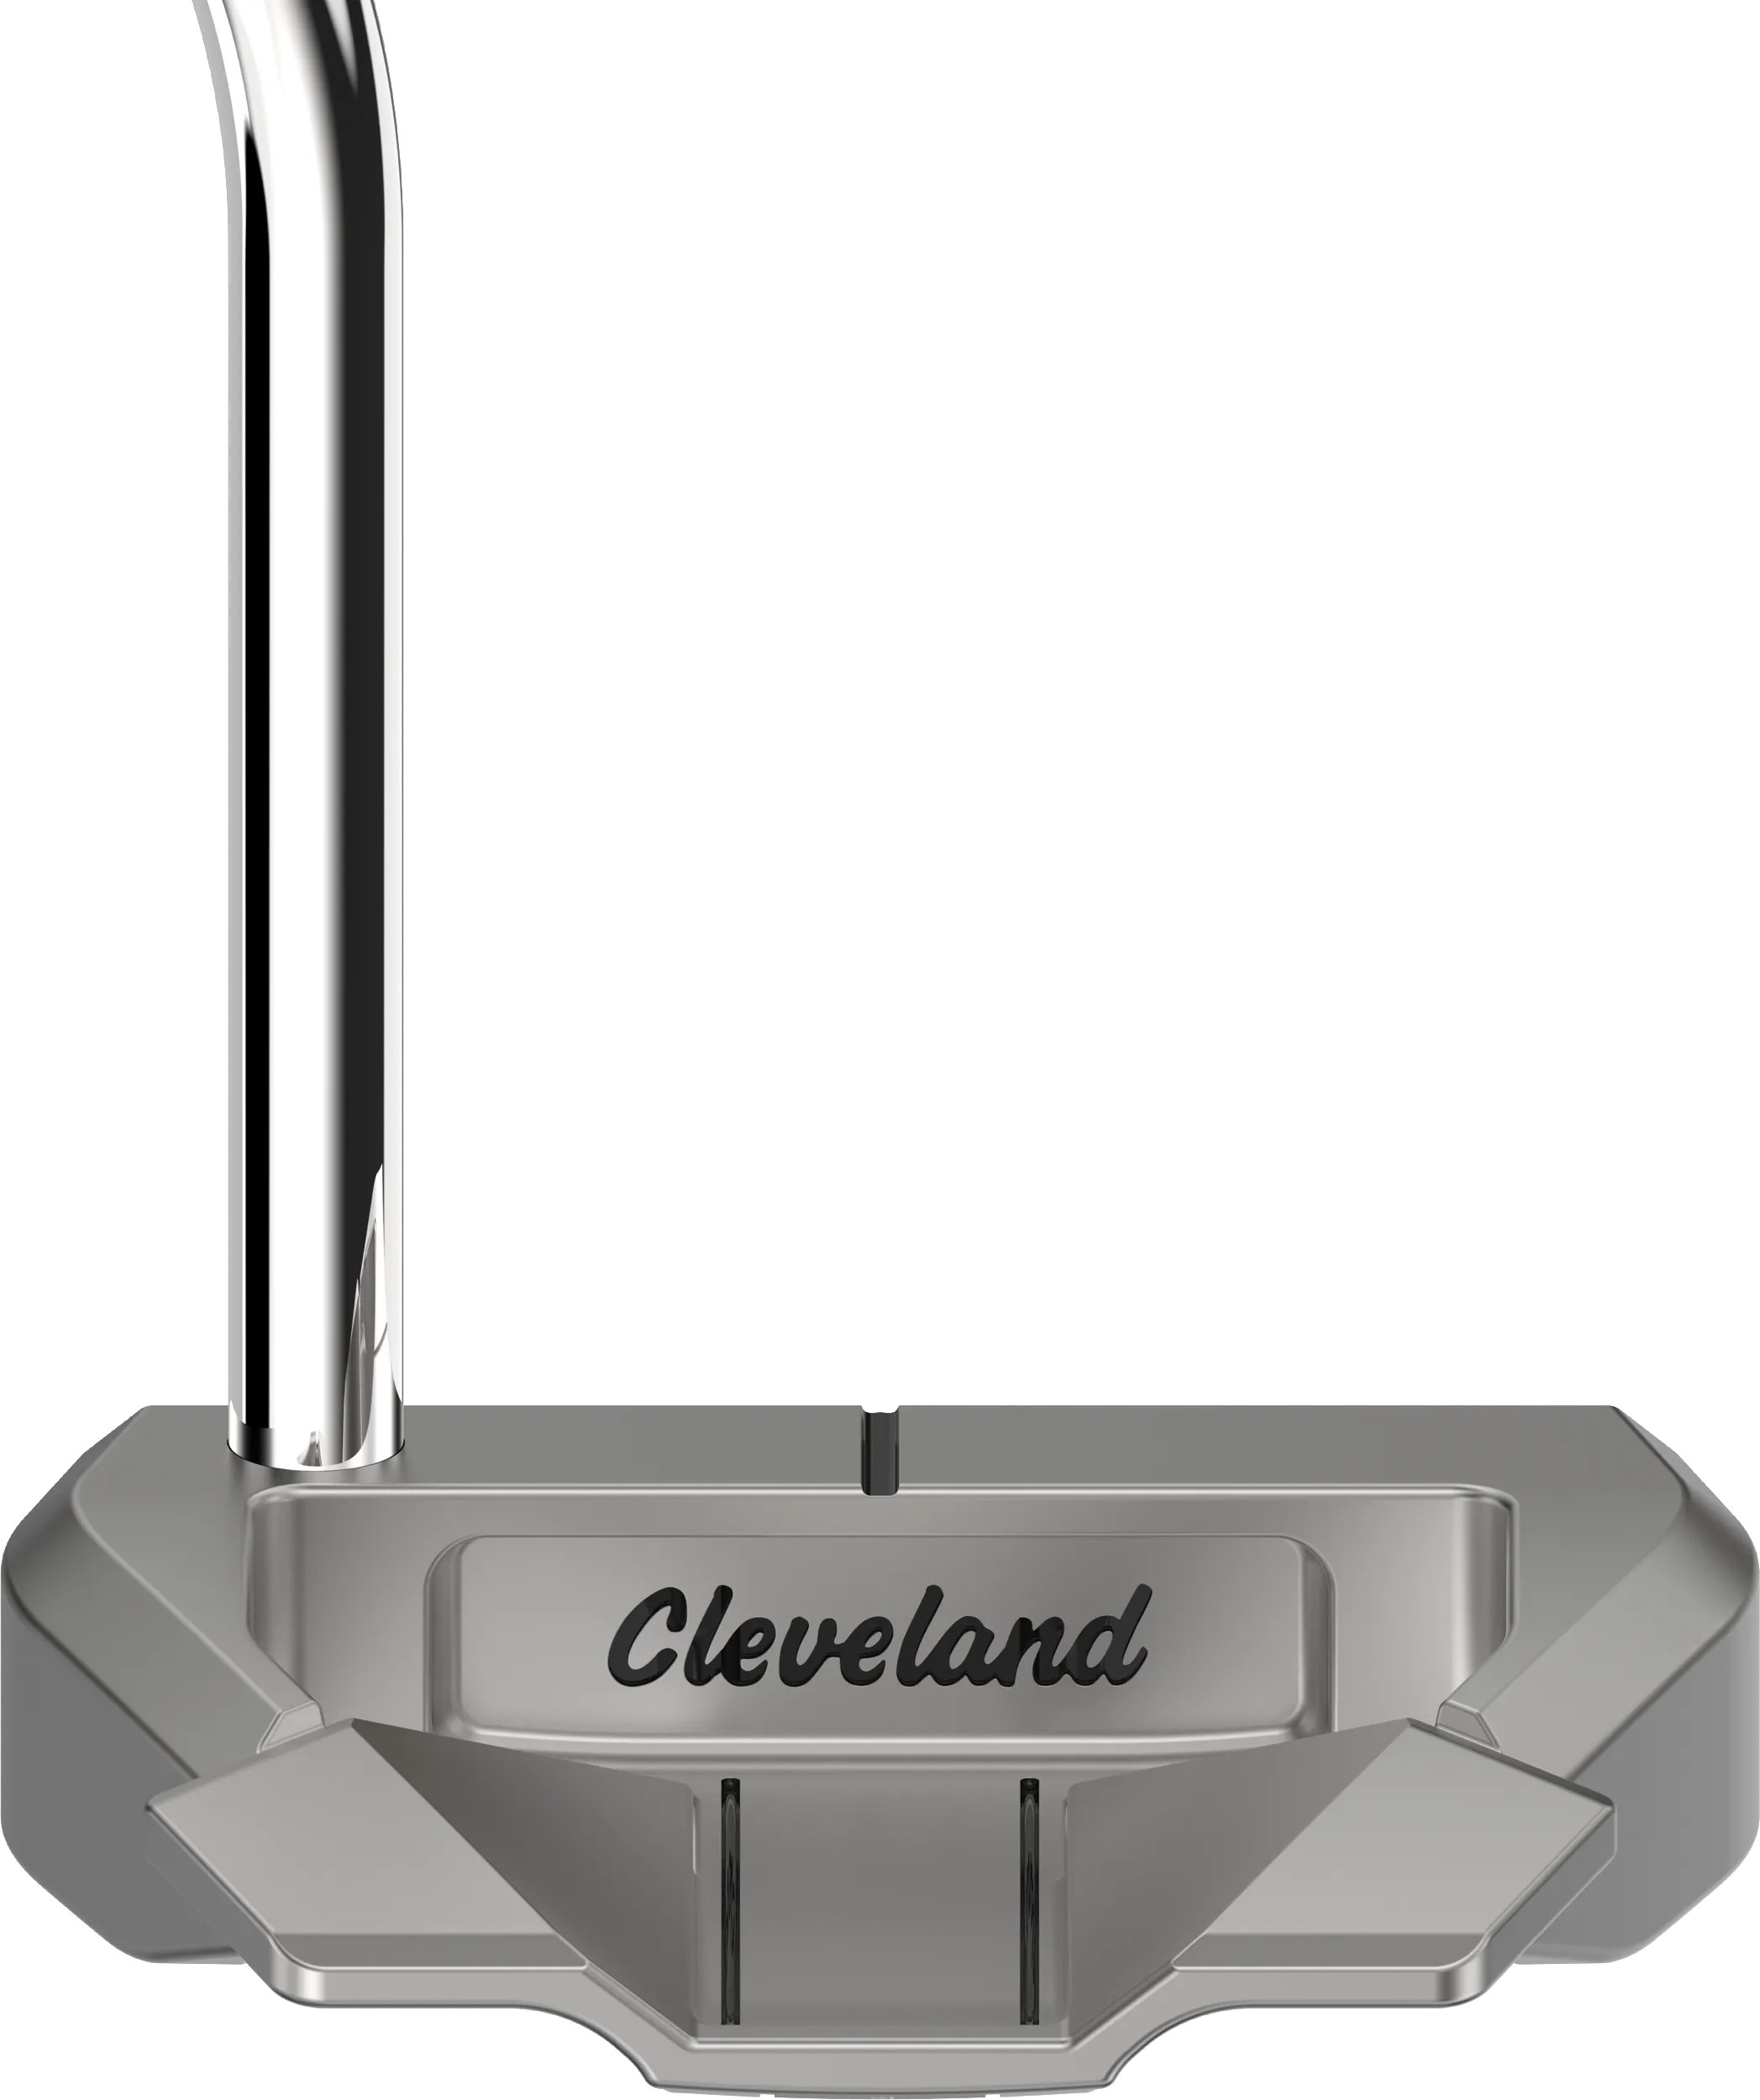 Cleveland HB Soft 2 #15 Putter